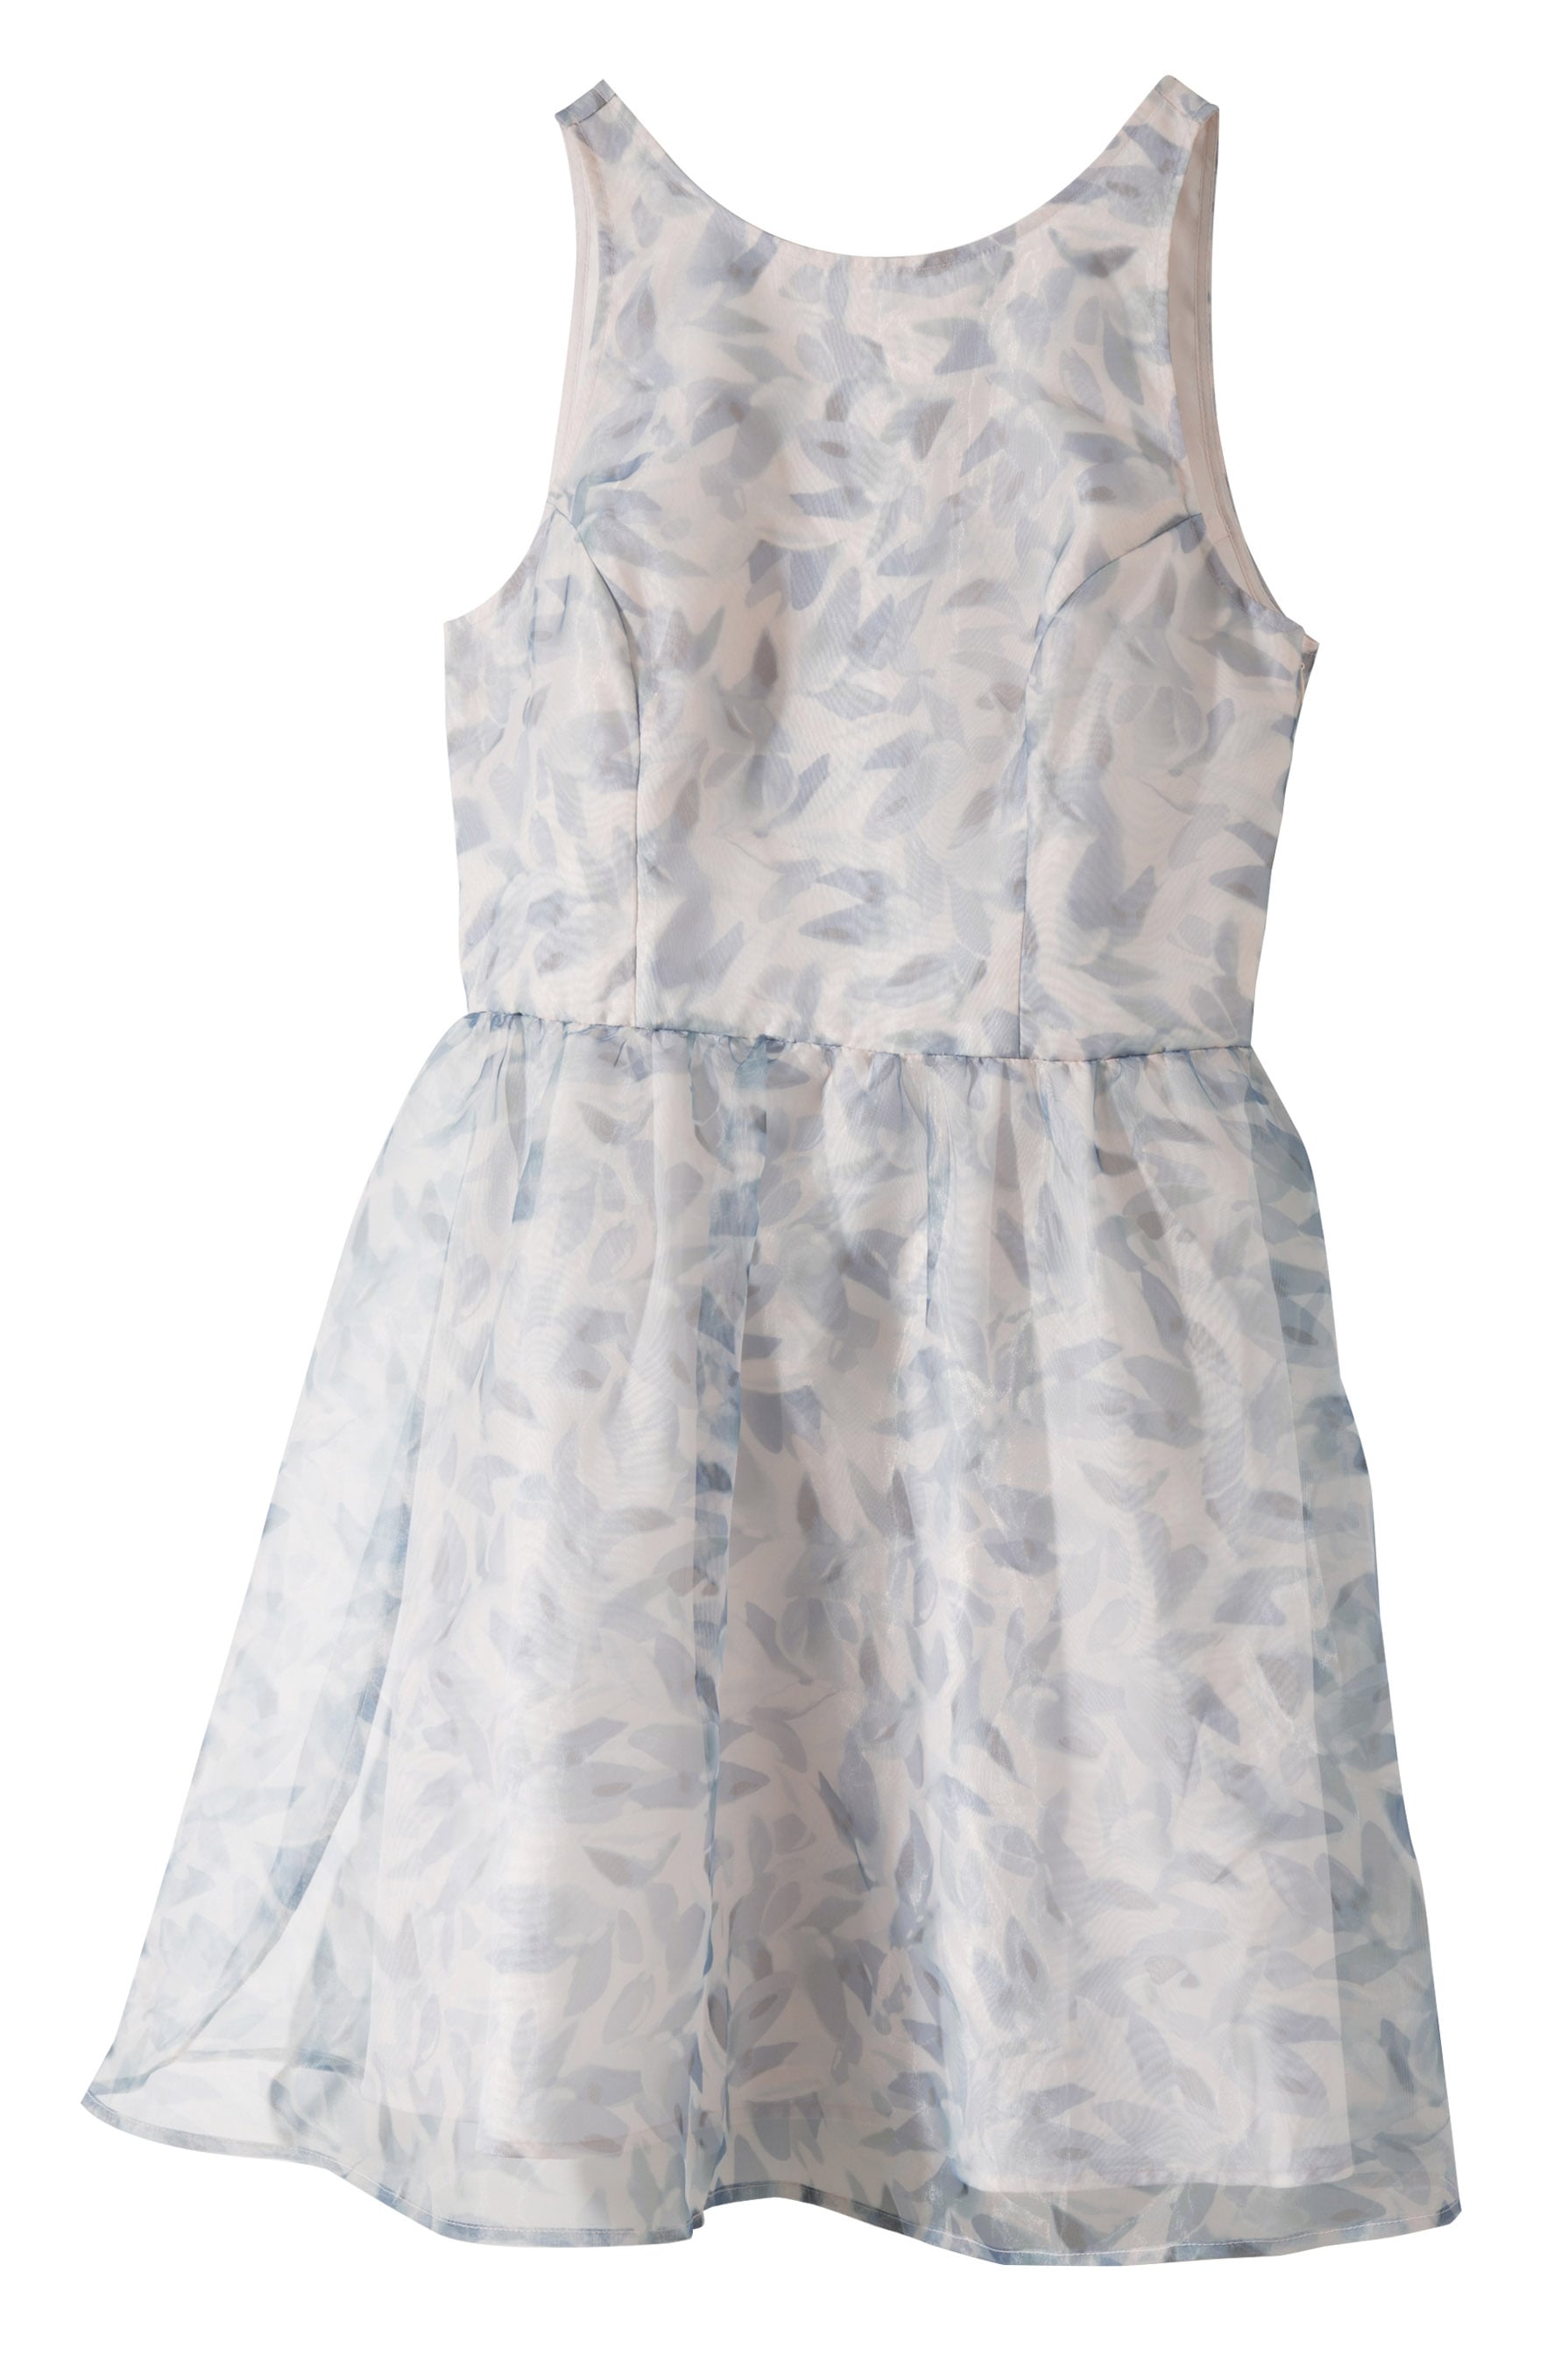 Lauren Conrad debuts gorgeous Cinderella clothing line